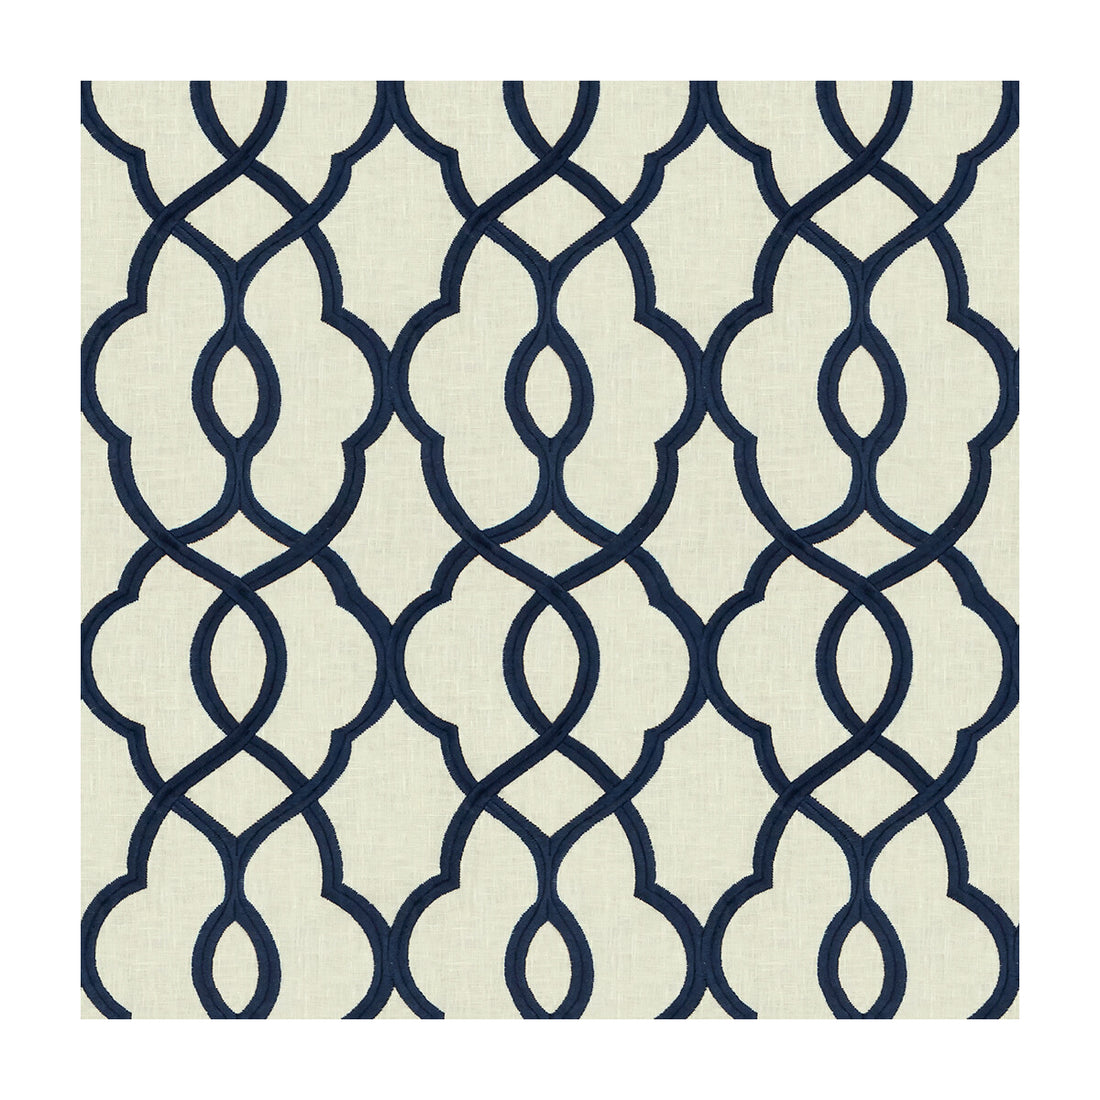 Kravet Design fabric in 33754-516 color - pattern 33754.516.0 - by Kravet Design in the Indigo collection